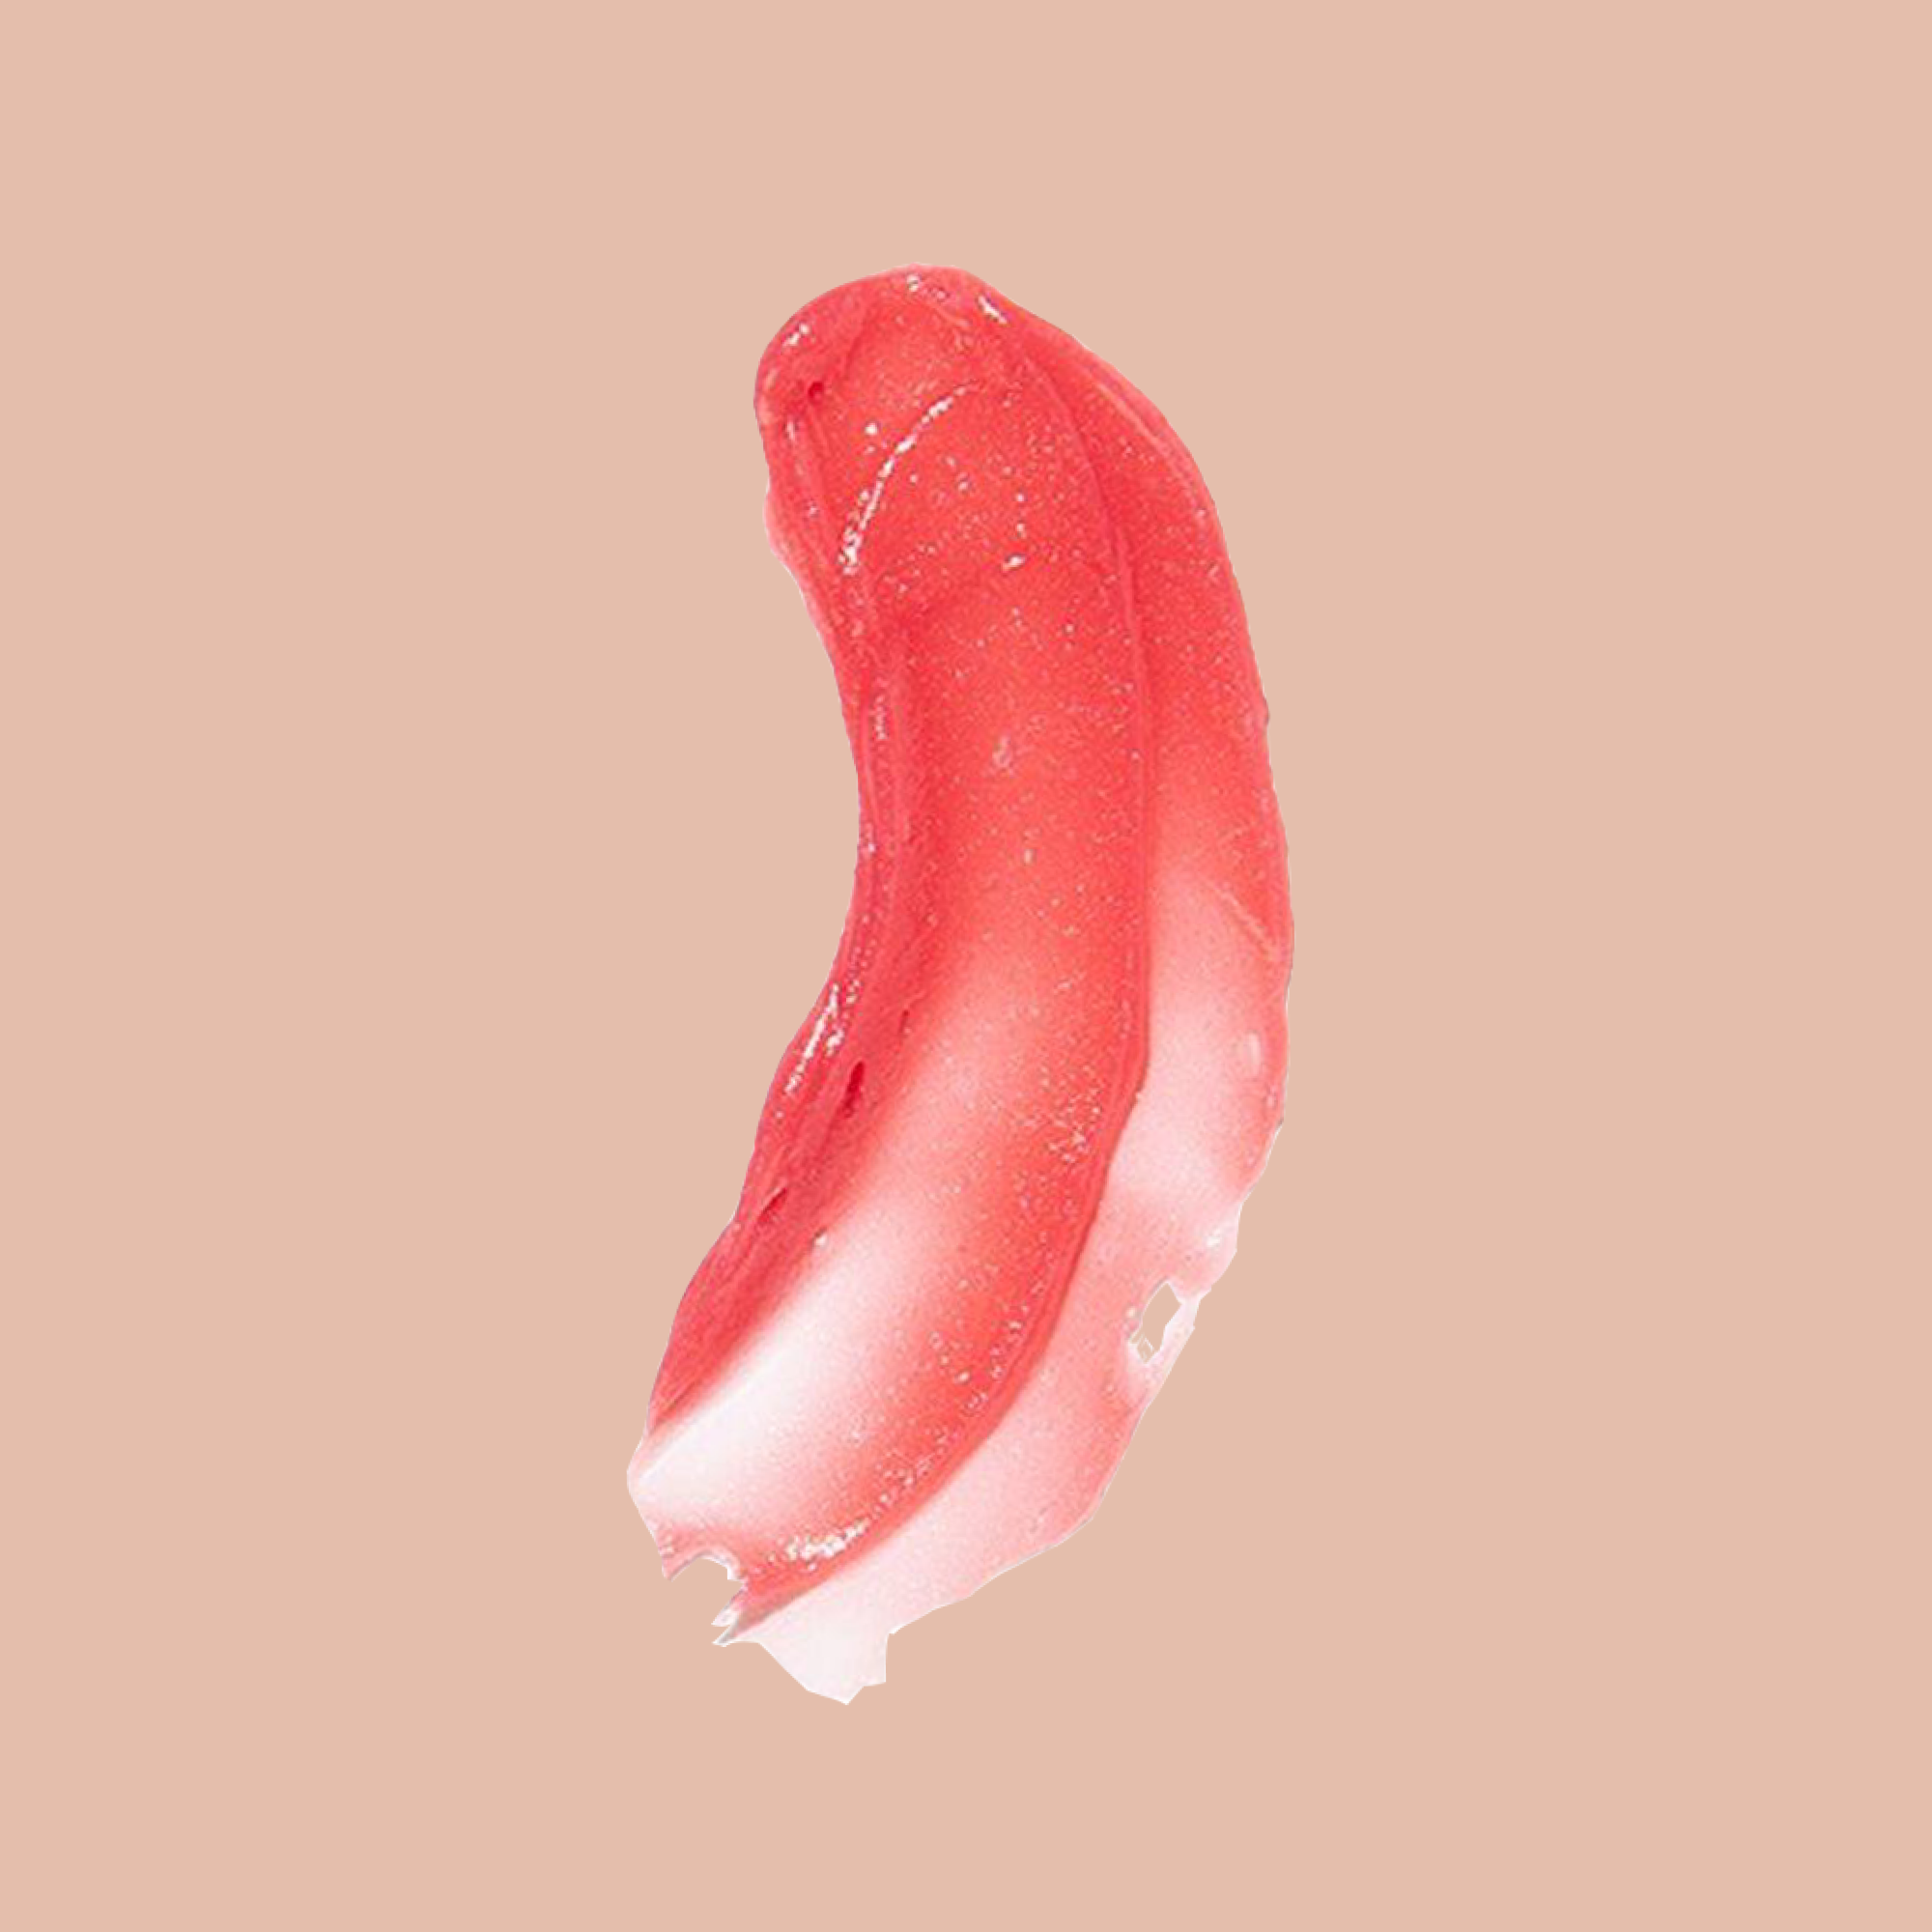 TRICK & TREAT LIP BALM - Watermelon Balm with Natural Tint